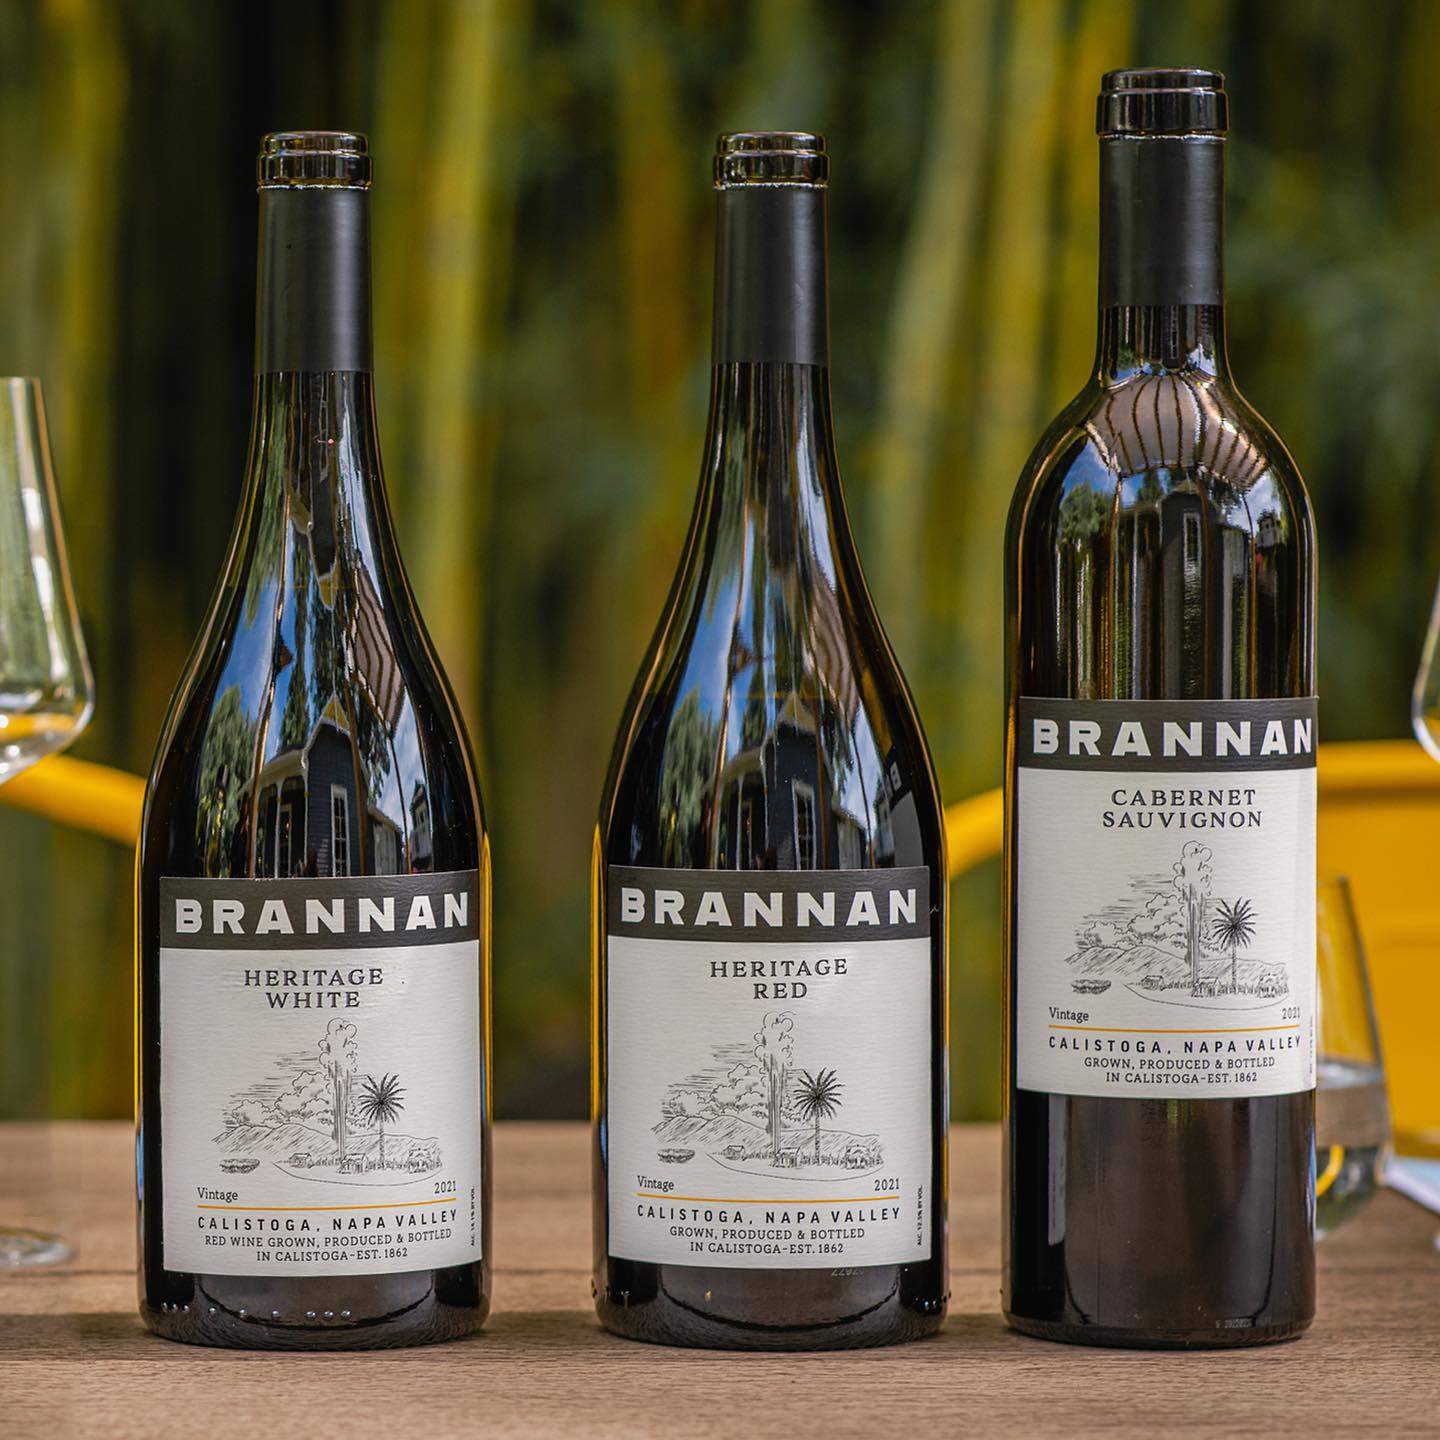 Brannan wines 2